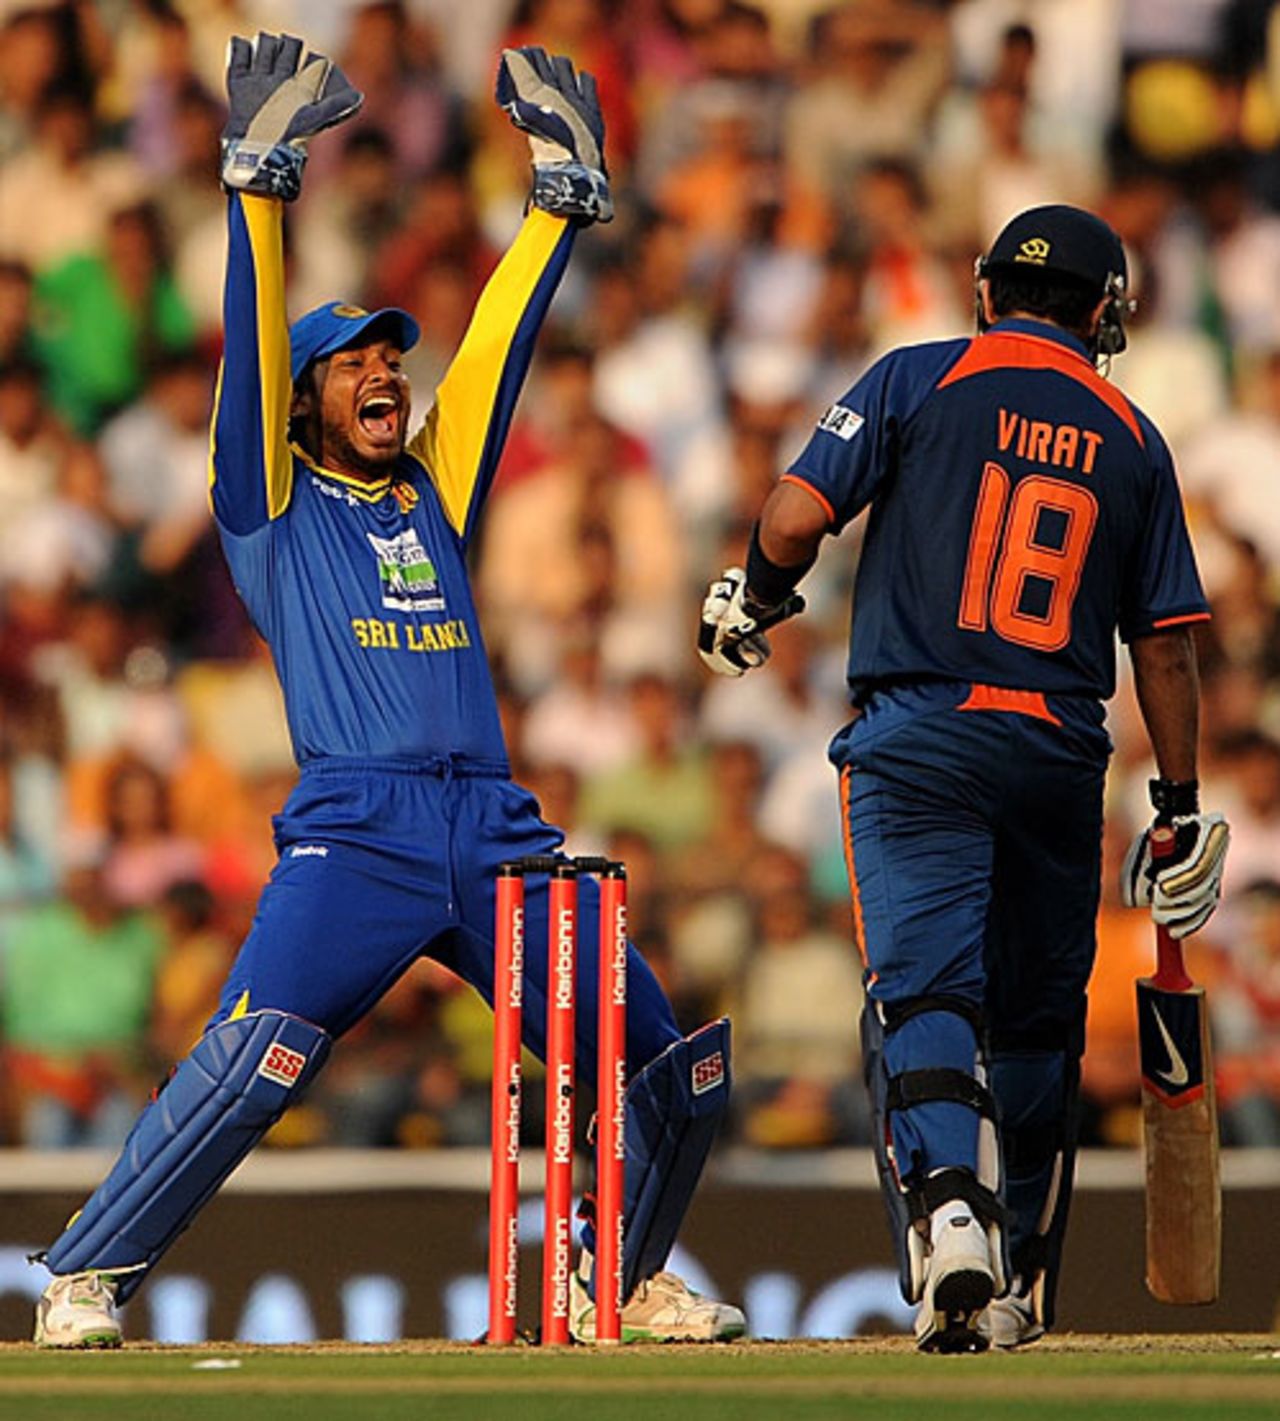 Kumar Sangakkara appeals successfully to dismiss Virat Kohli, India v Sri Lanka, 2nd ODI, Nagpur, December 18, 2009